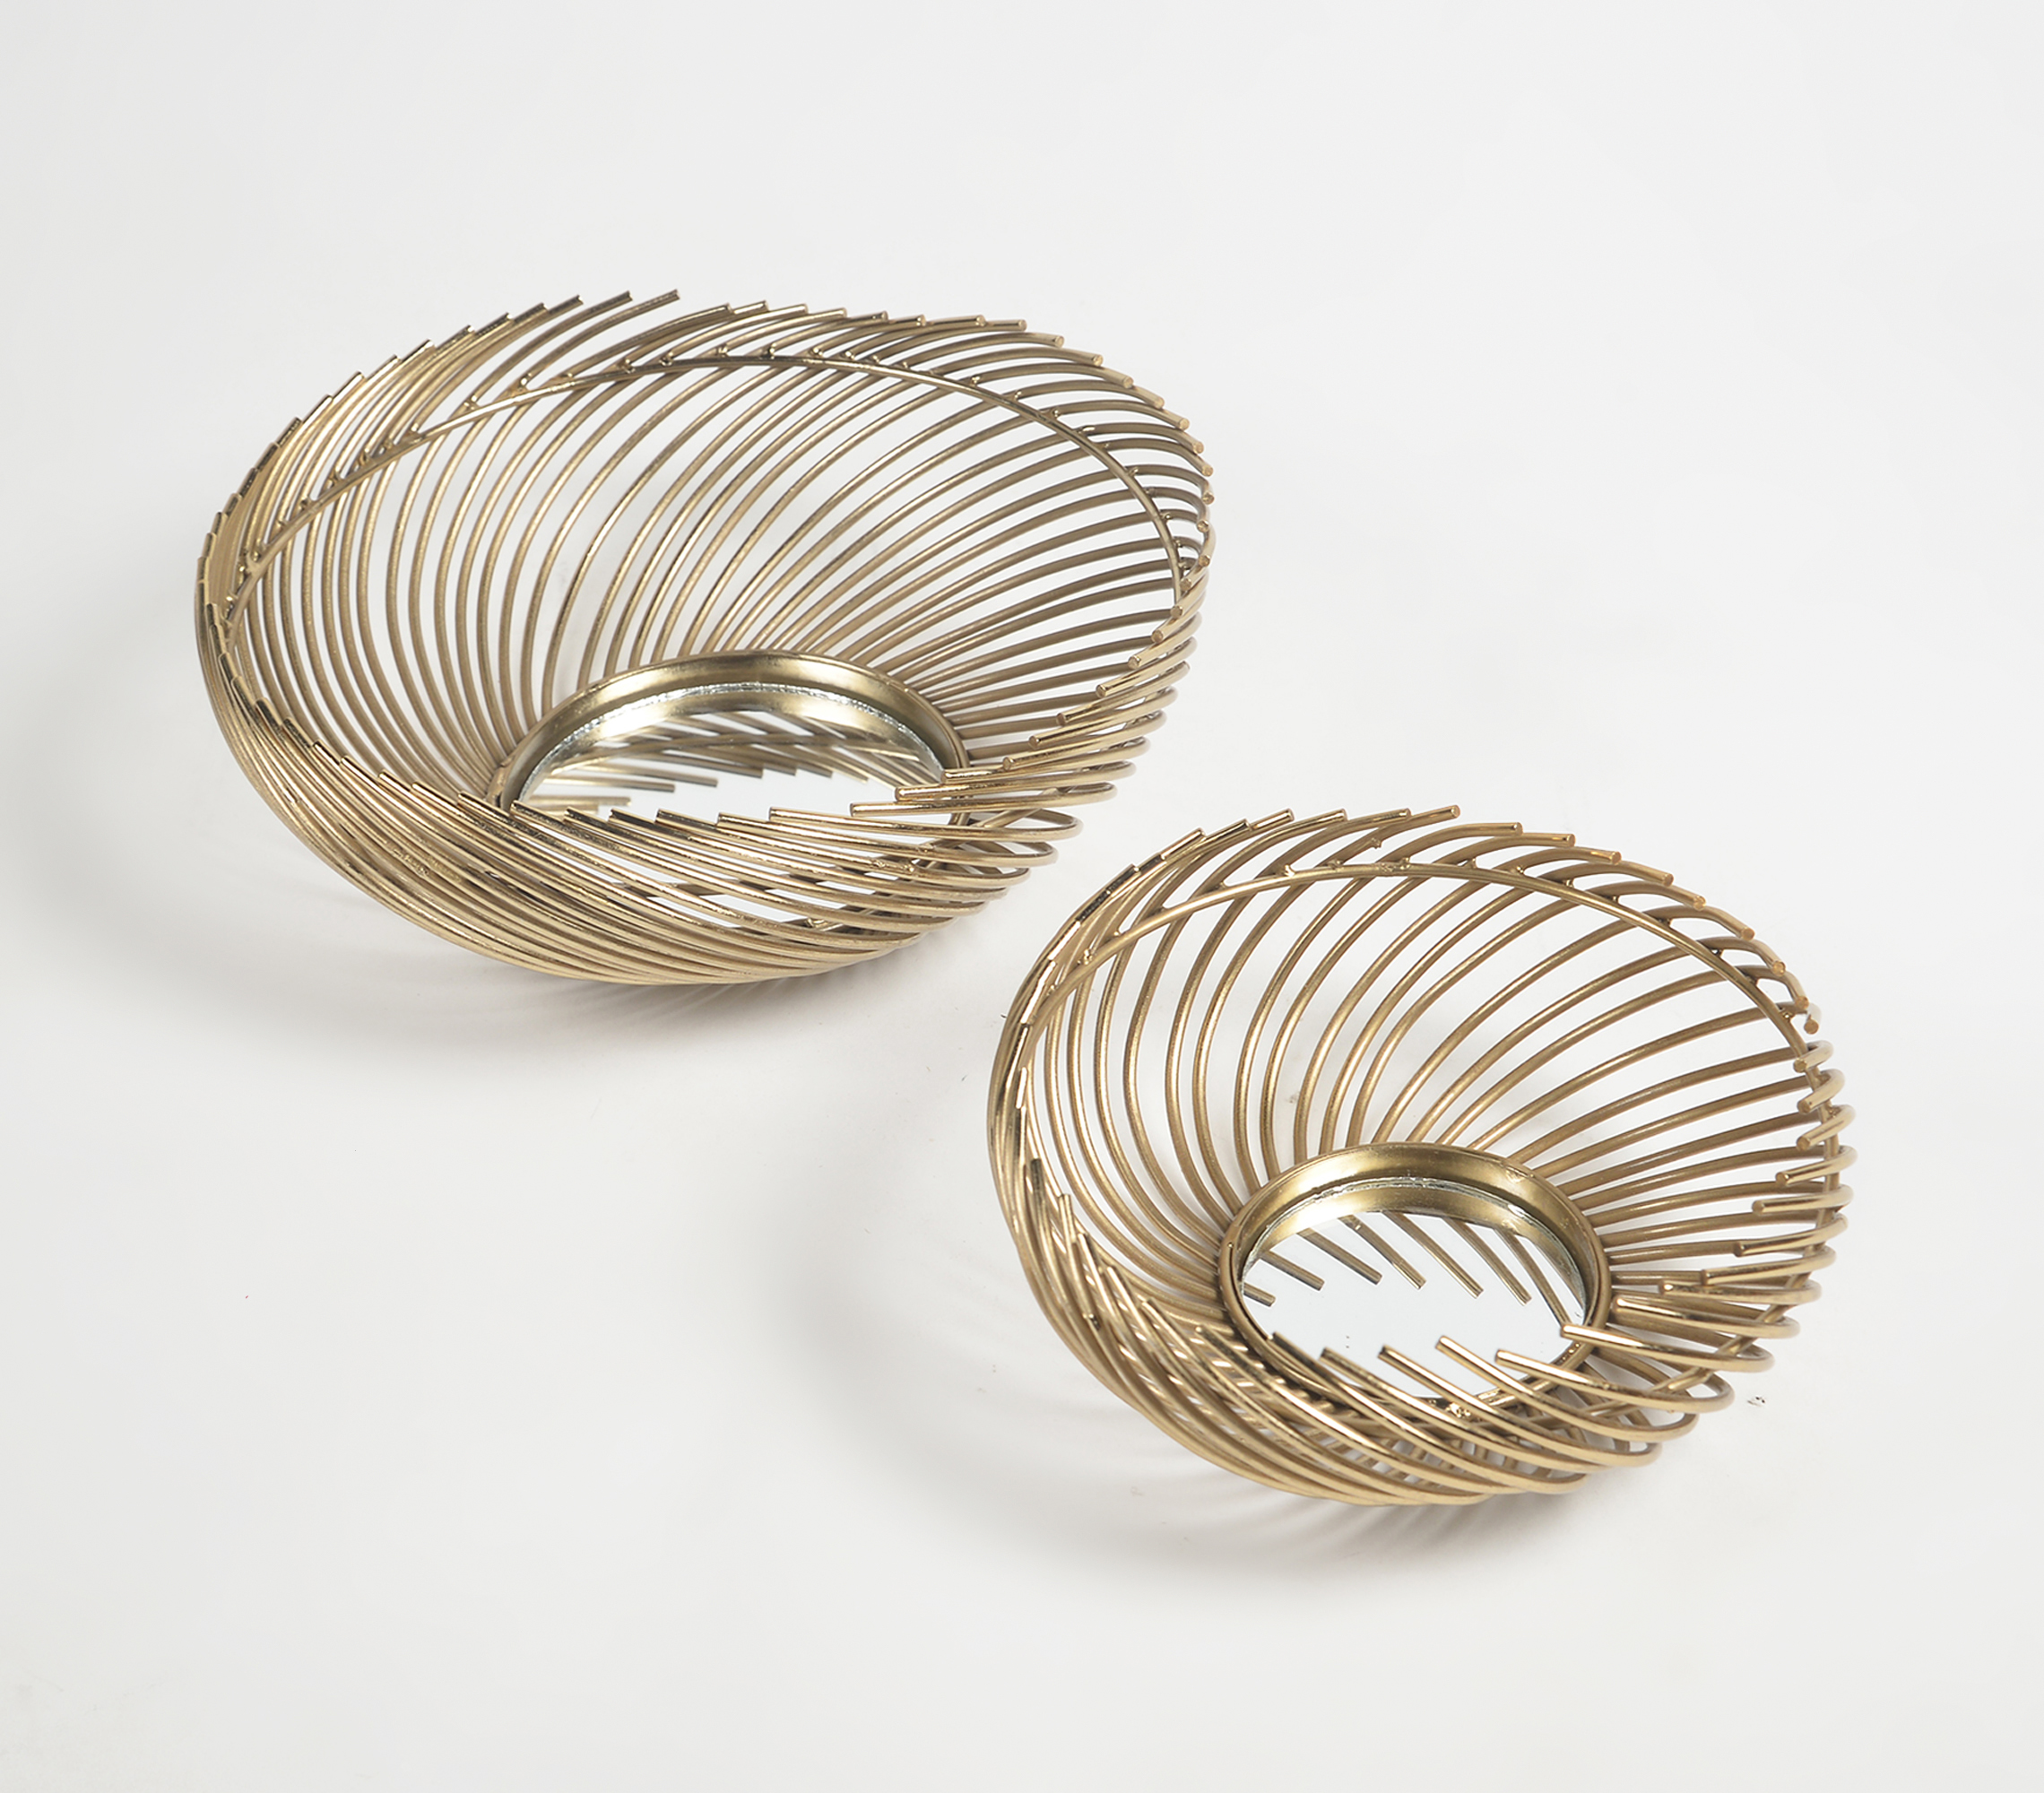 Antique gold-toned iron swirl utility bowls (set of 2)